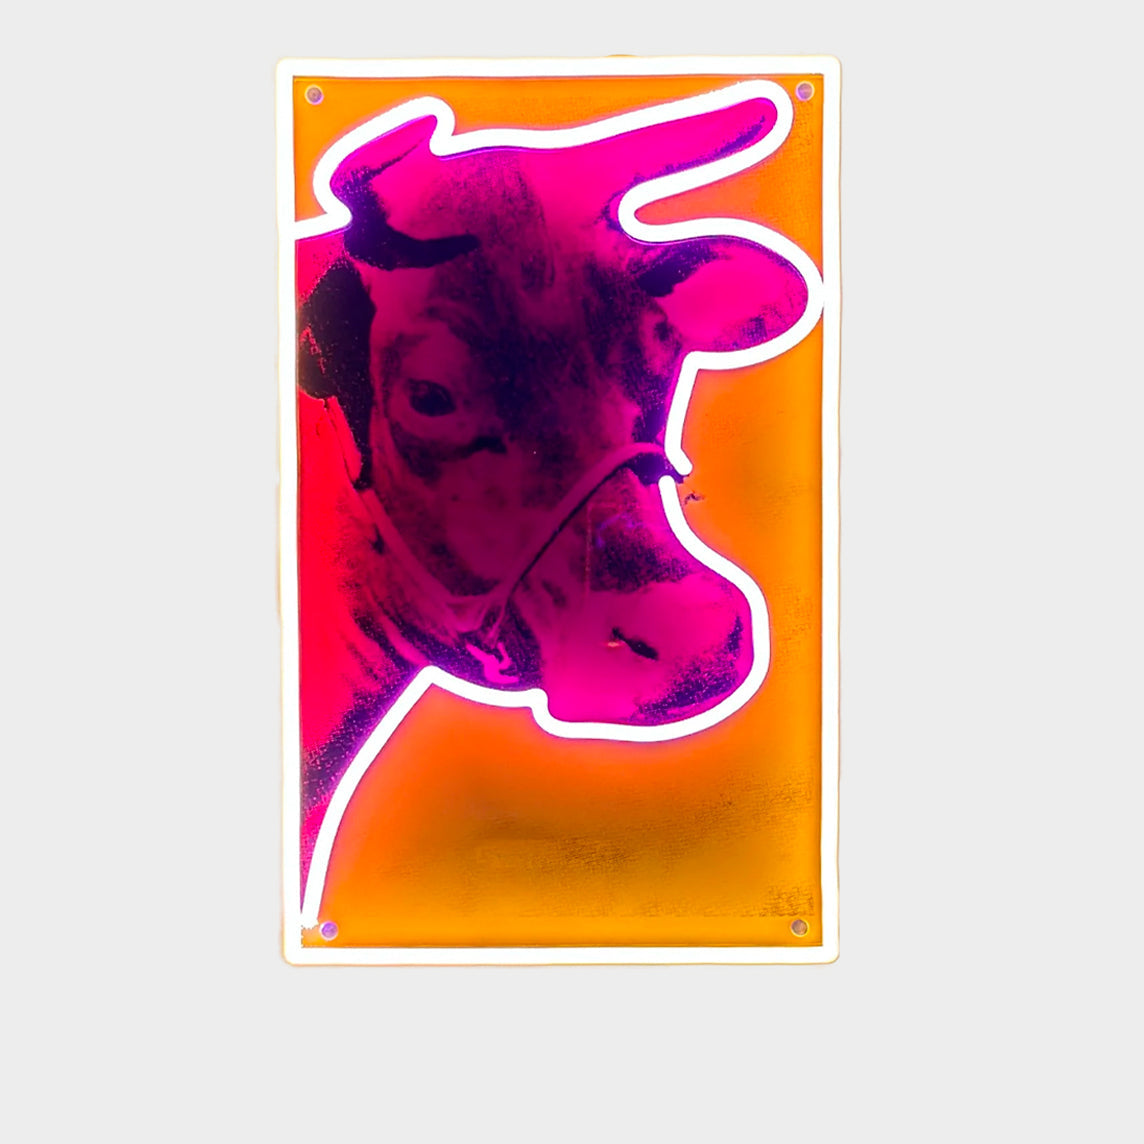 Yellowpop - 'Cow' - Andy Warhol LED Art